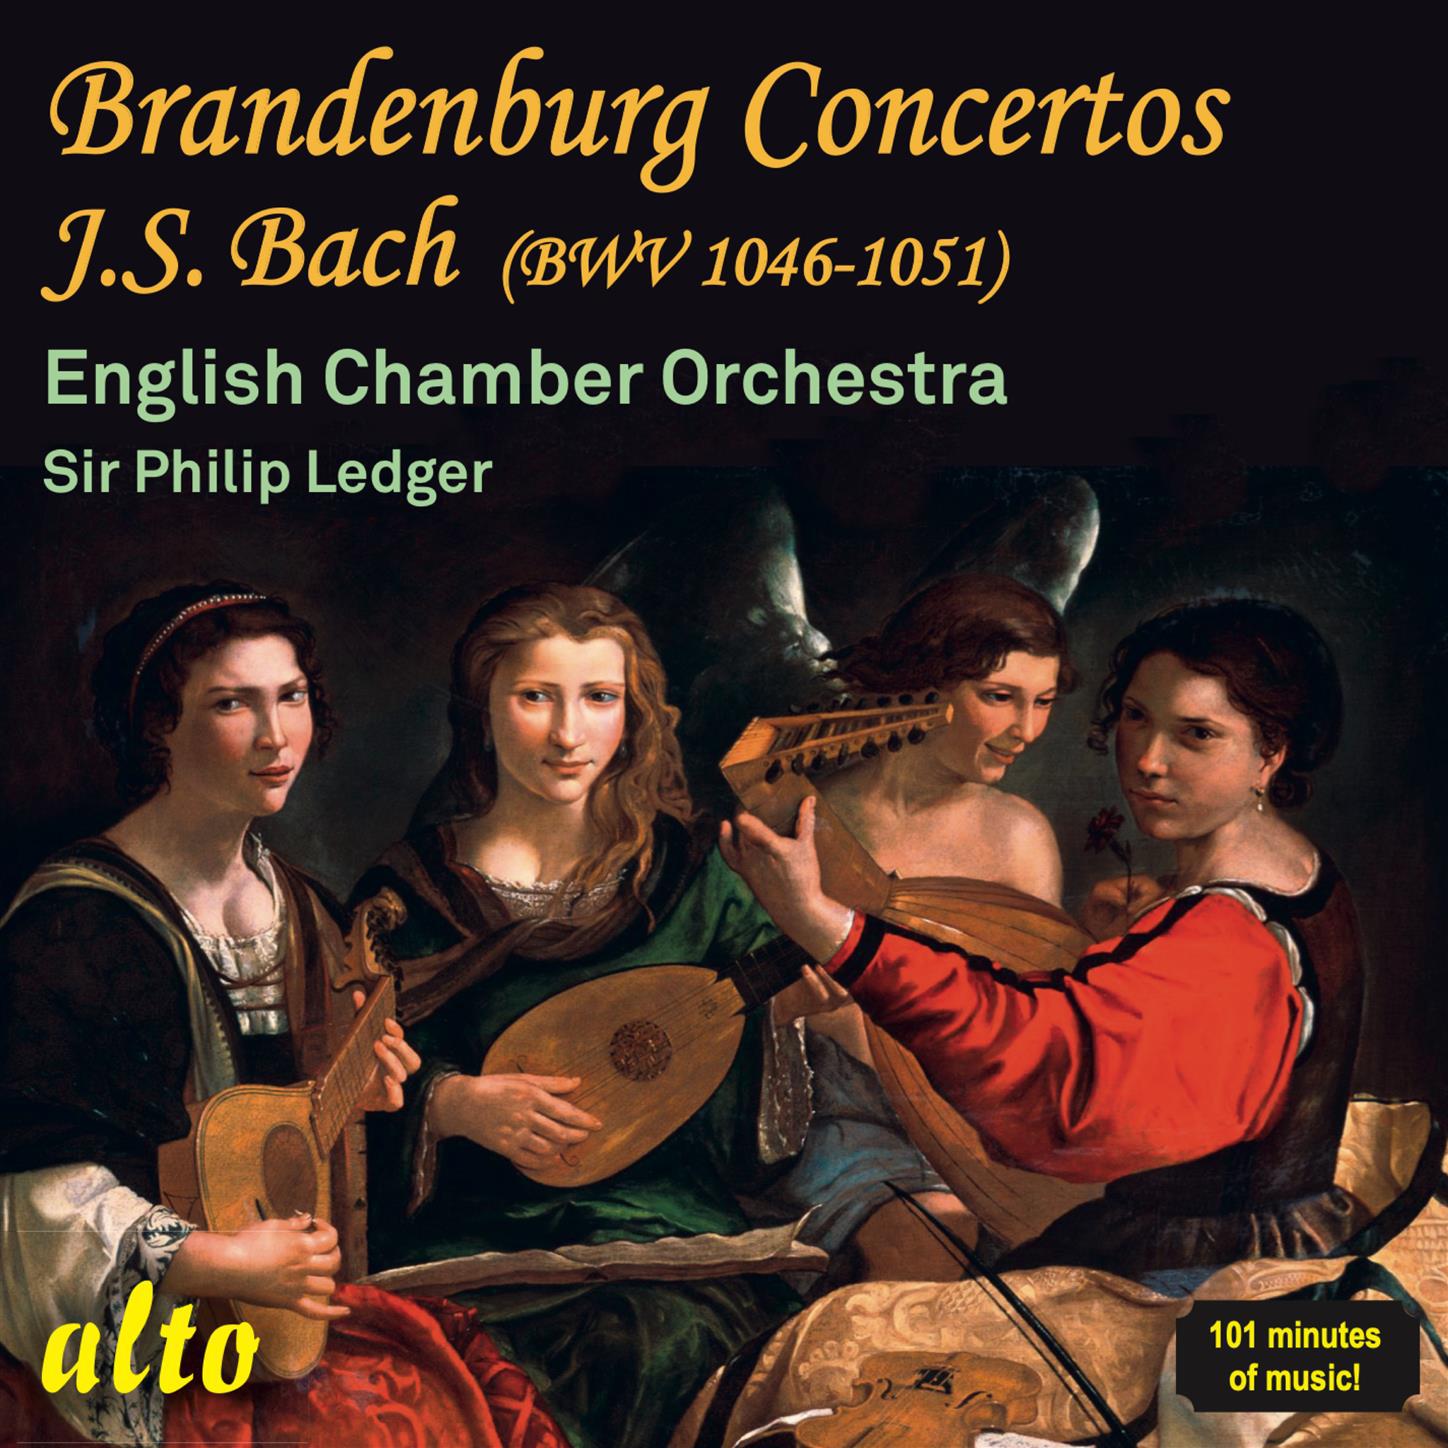 Brandenburg Concerto No.2 in F major, BWV 1047: III. Allegro assai